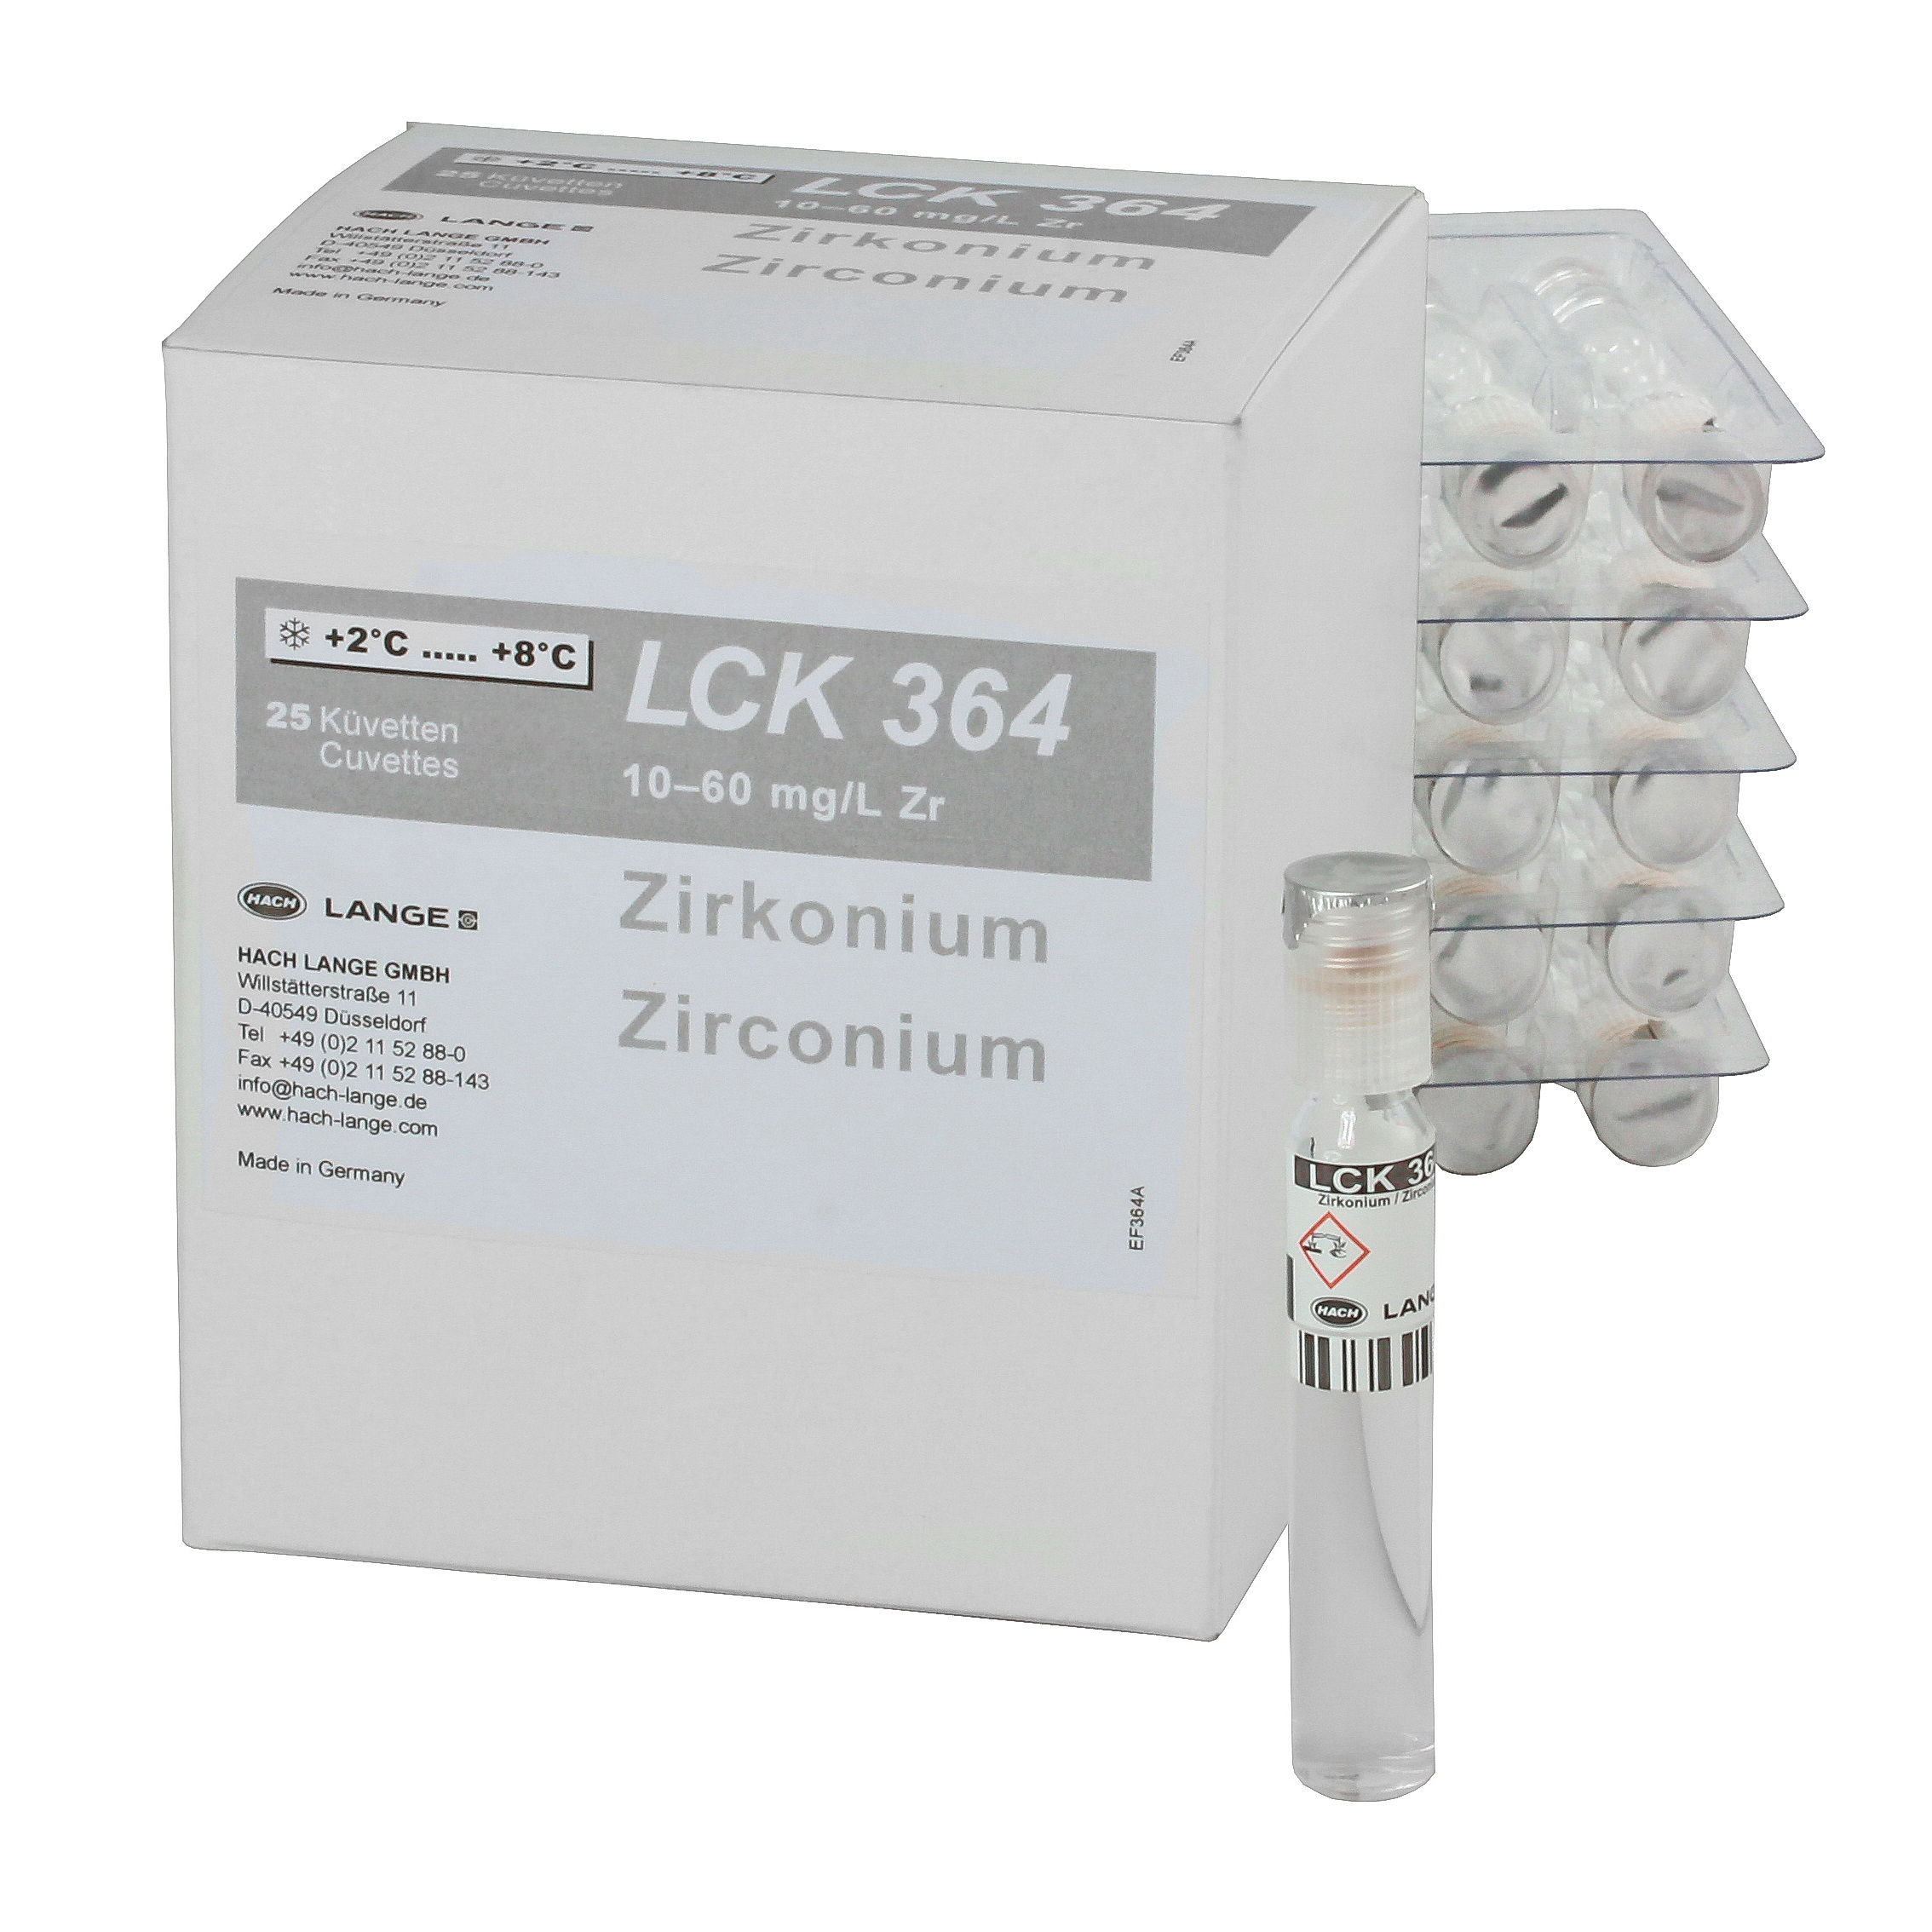 Ny kuvettetest: LCK 364 Zirconium